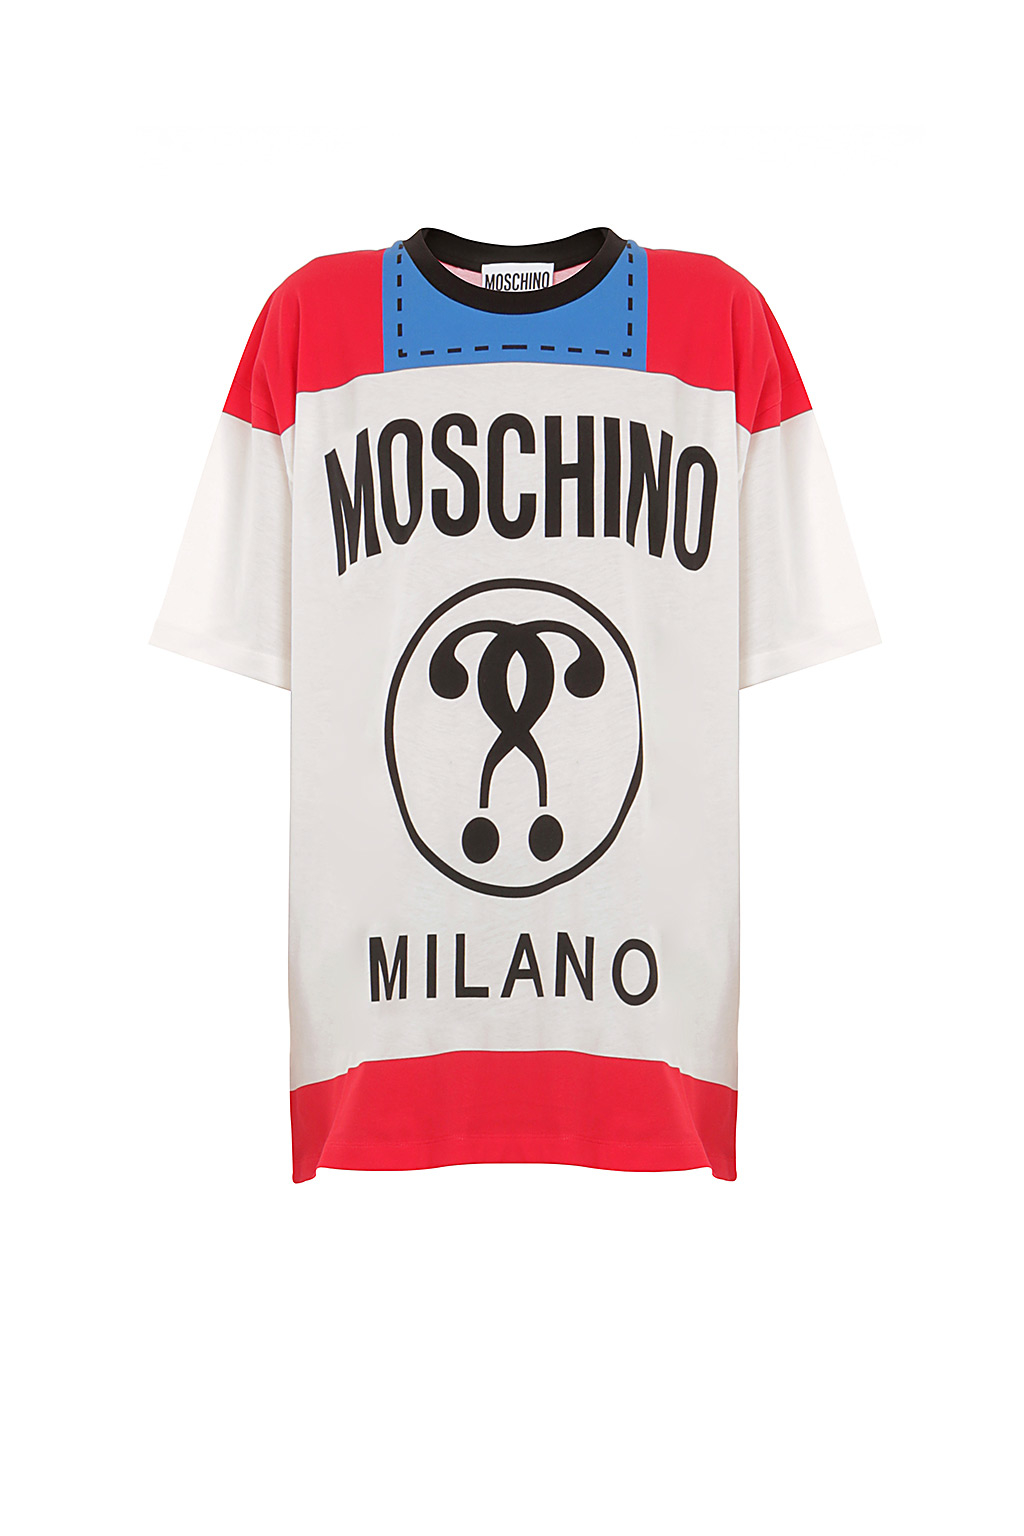 Moschino Cotton Milano Logo T.shirt in Blue - Lyst